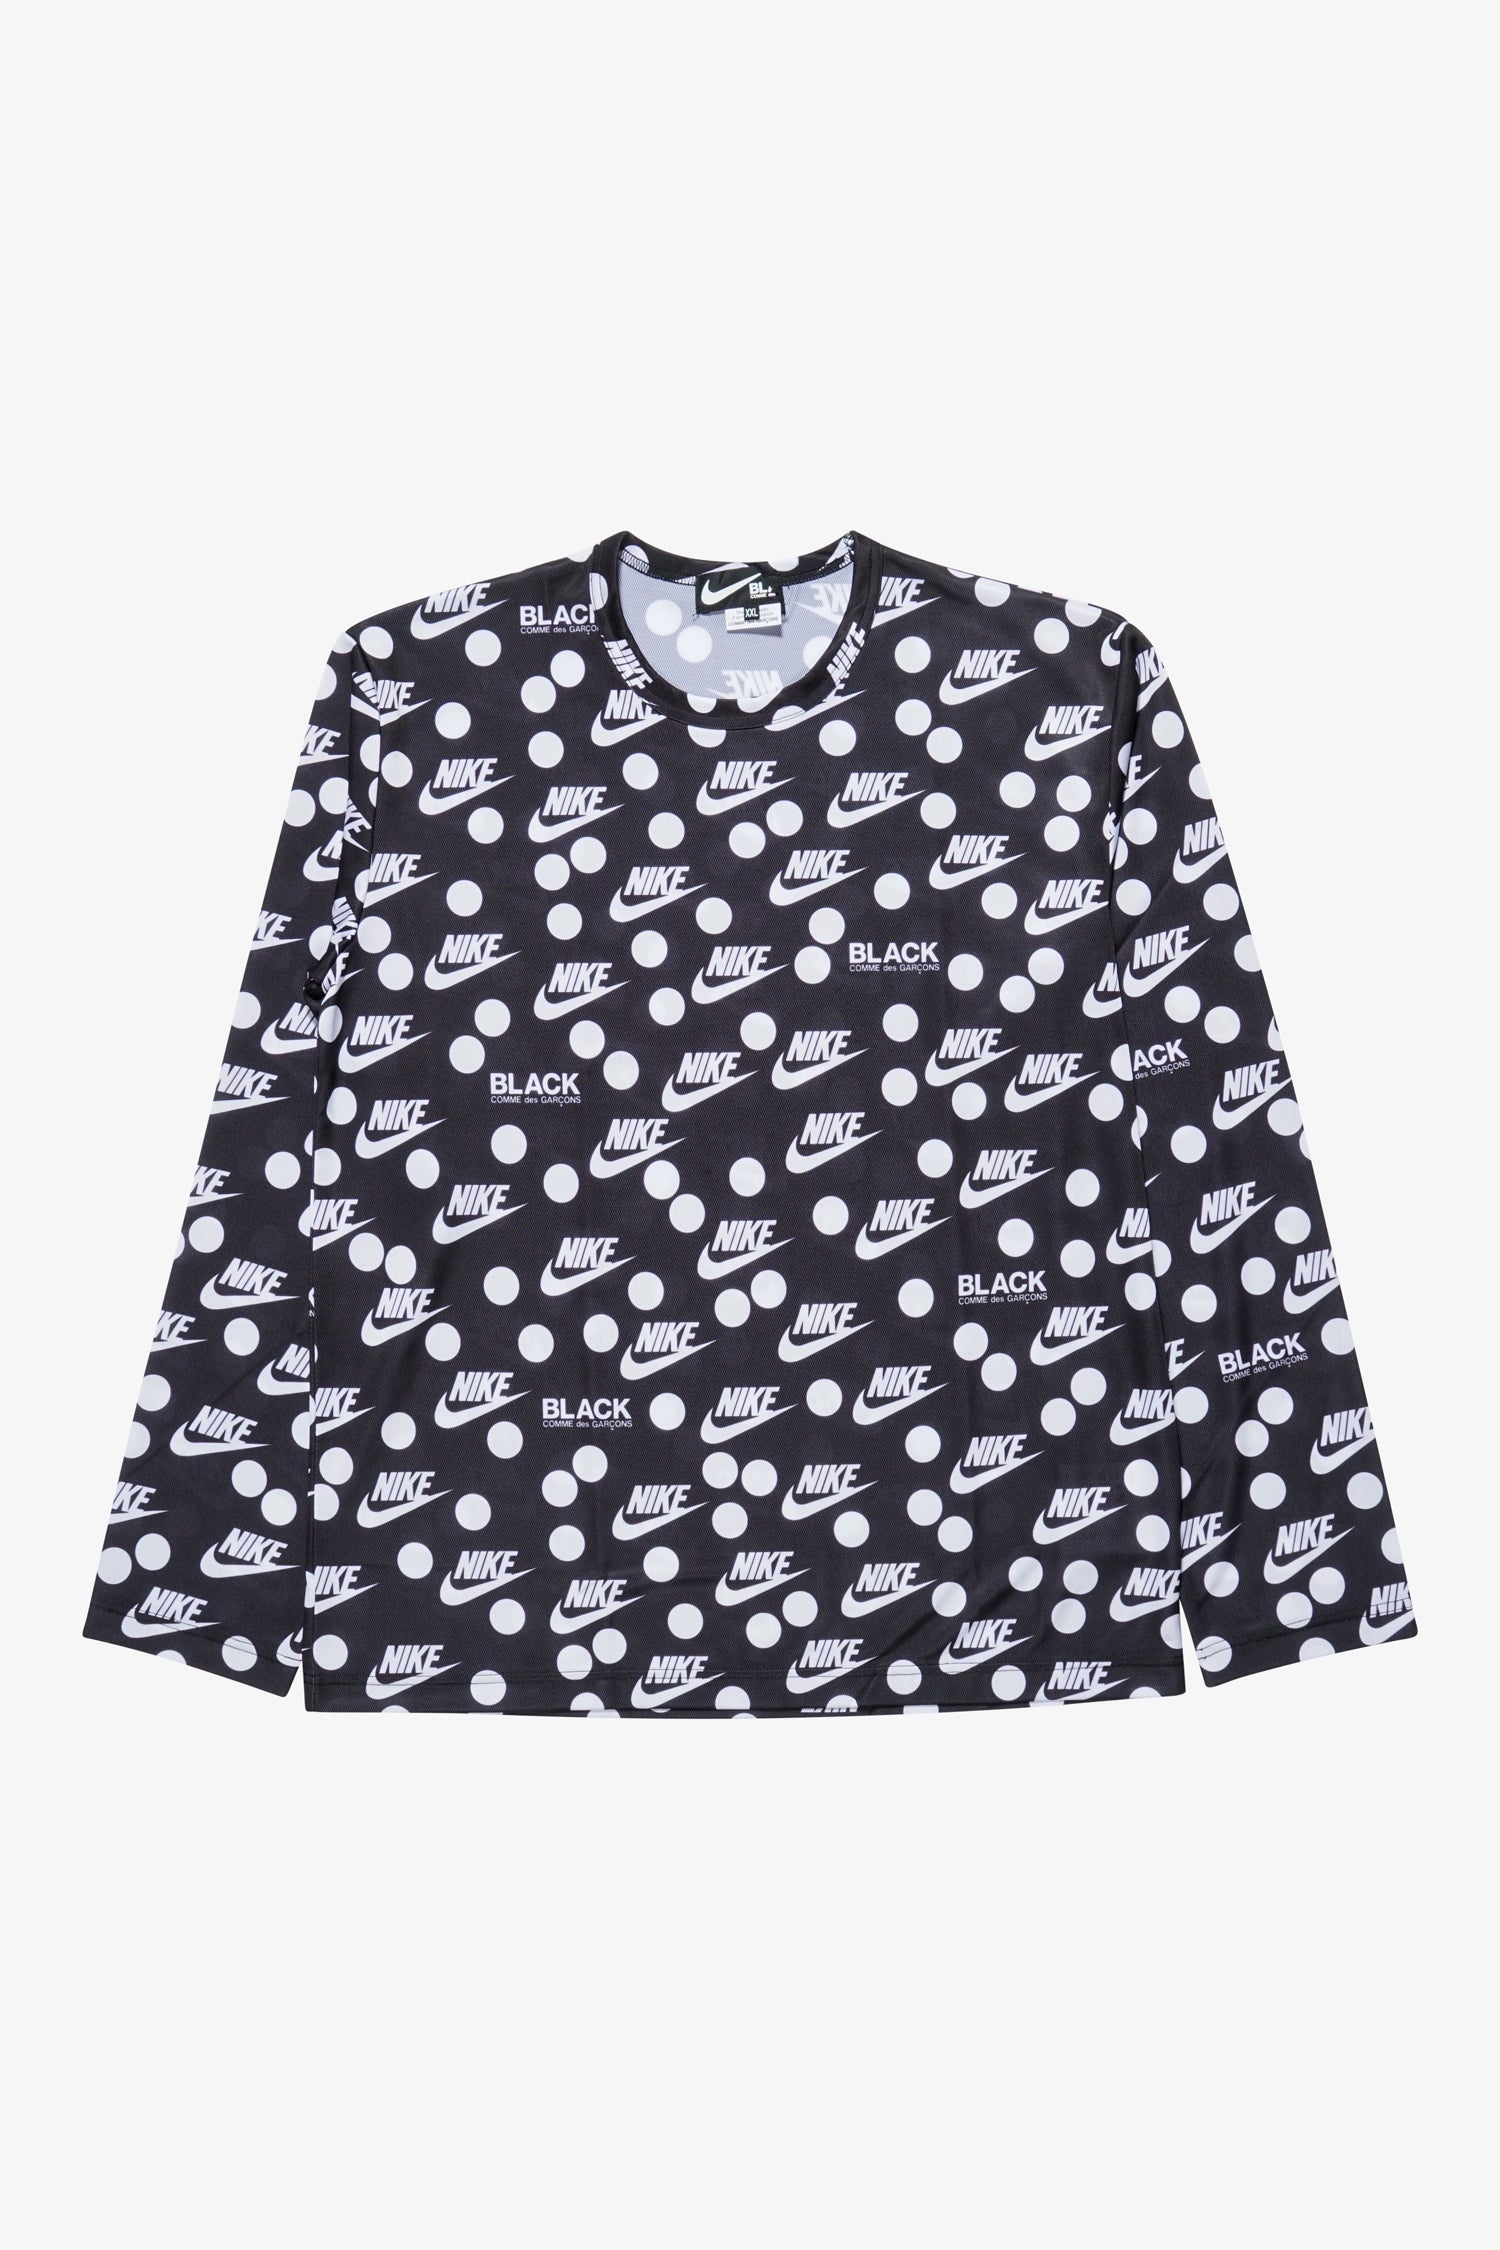 Selectshop FRAME - COMME DES GARCONS BLACK Nike Polka Dot Jersey Longsleeve T-Shirt Dubai